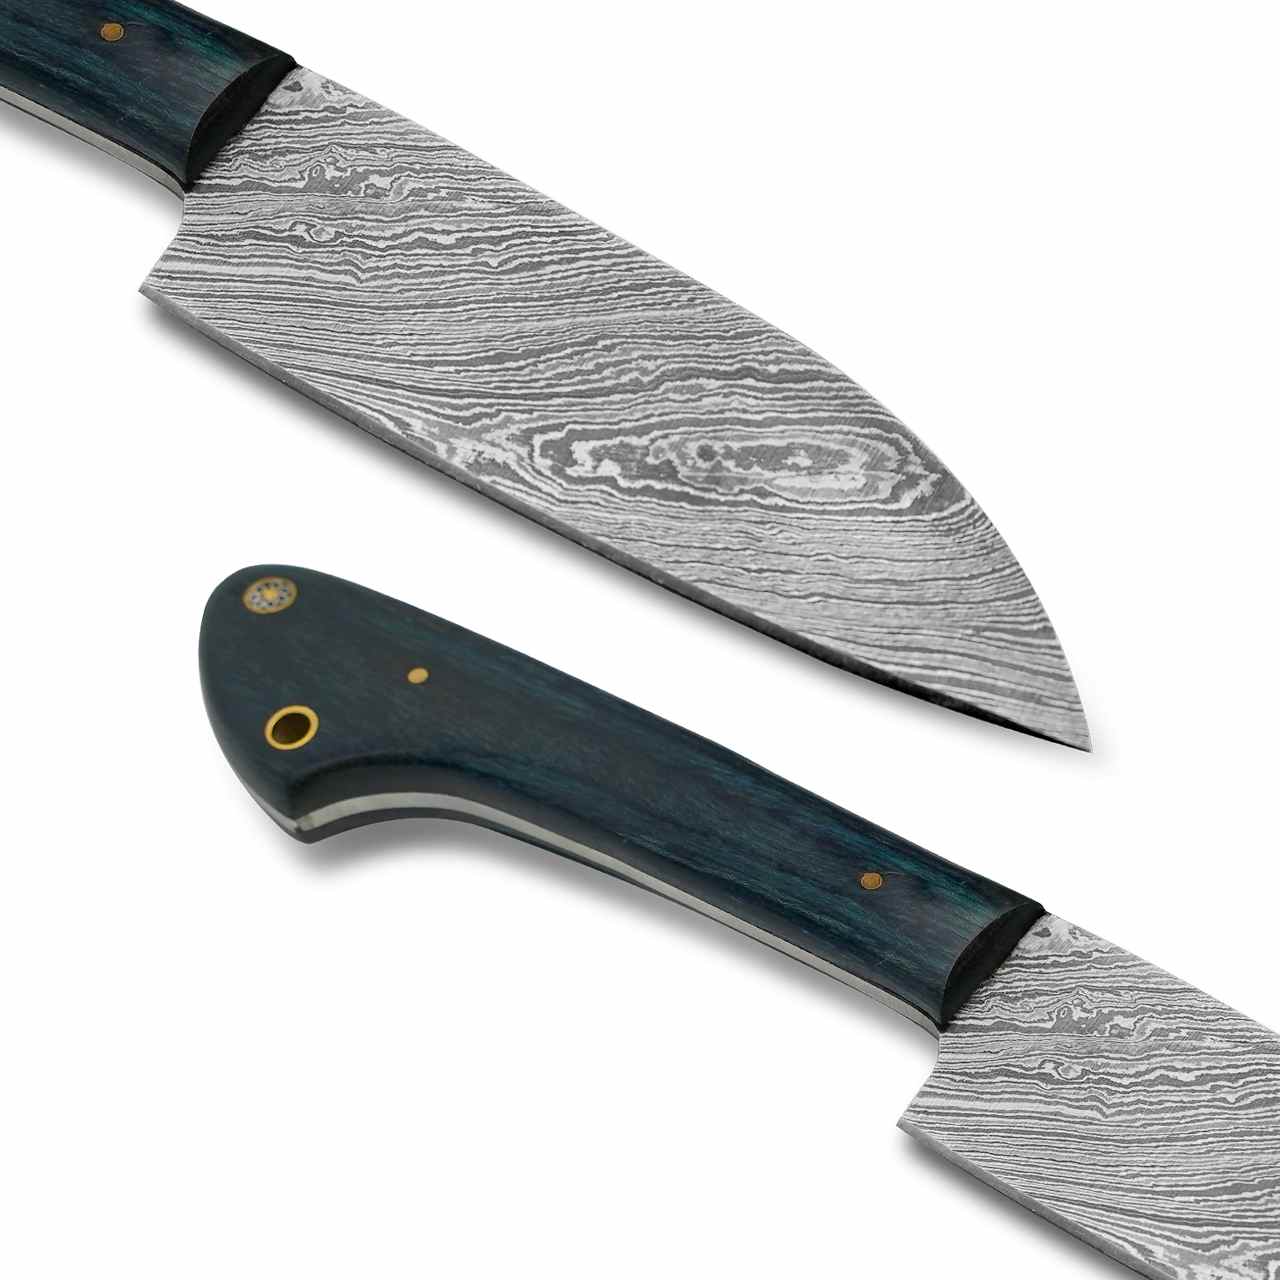 https://fusionlayers.us/wp-content/uploads/2021/07/Best-Paring-Knife-2.jpg